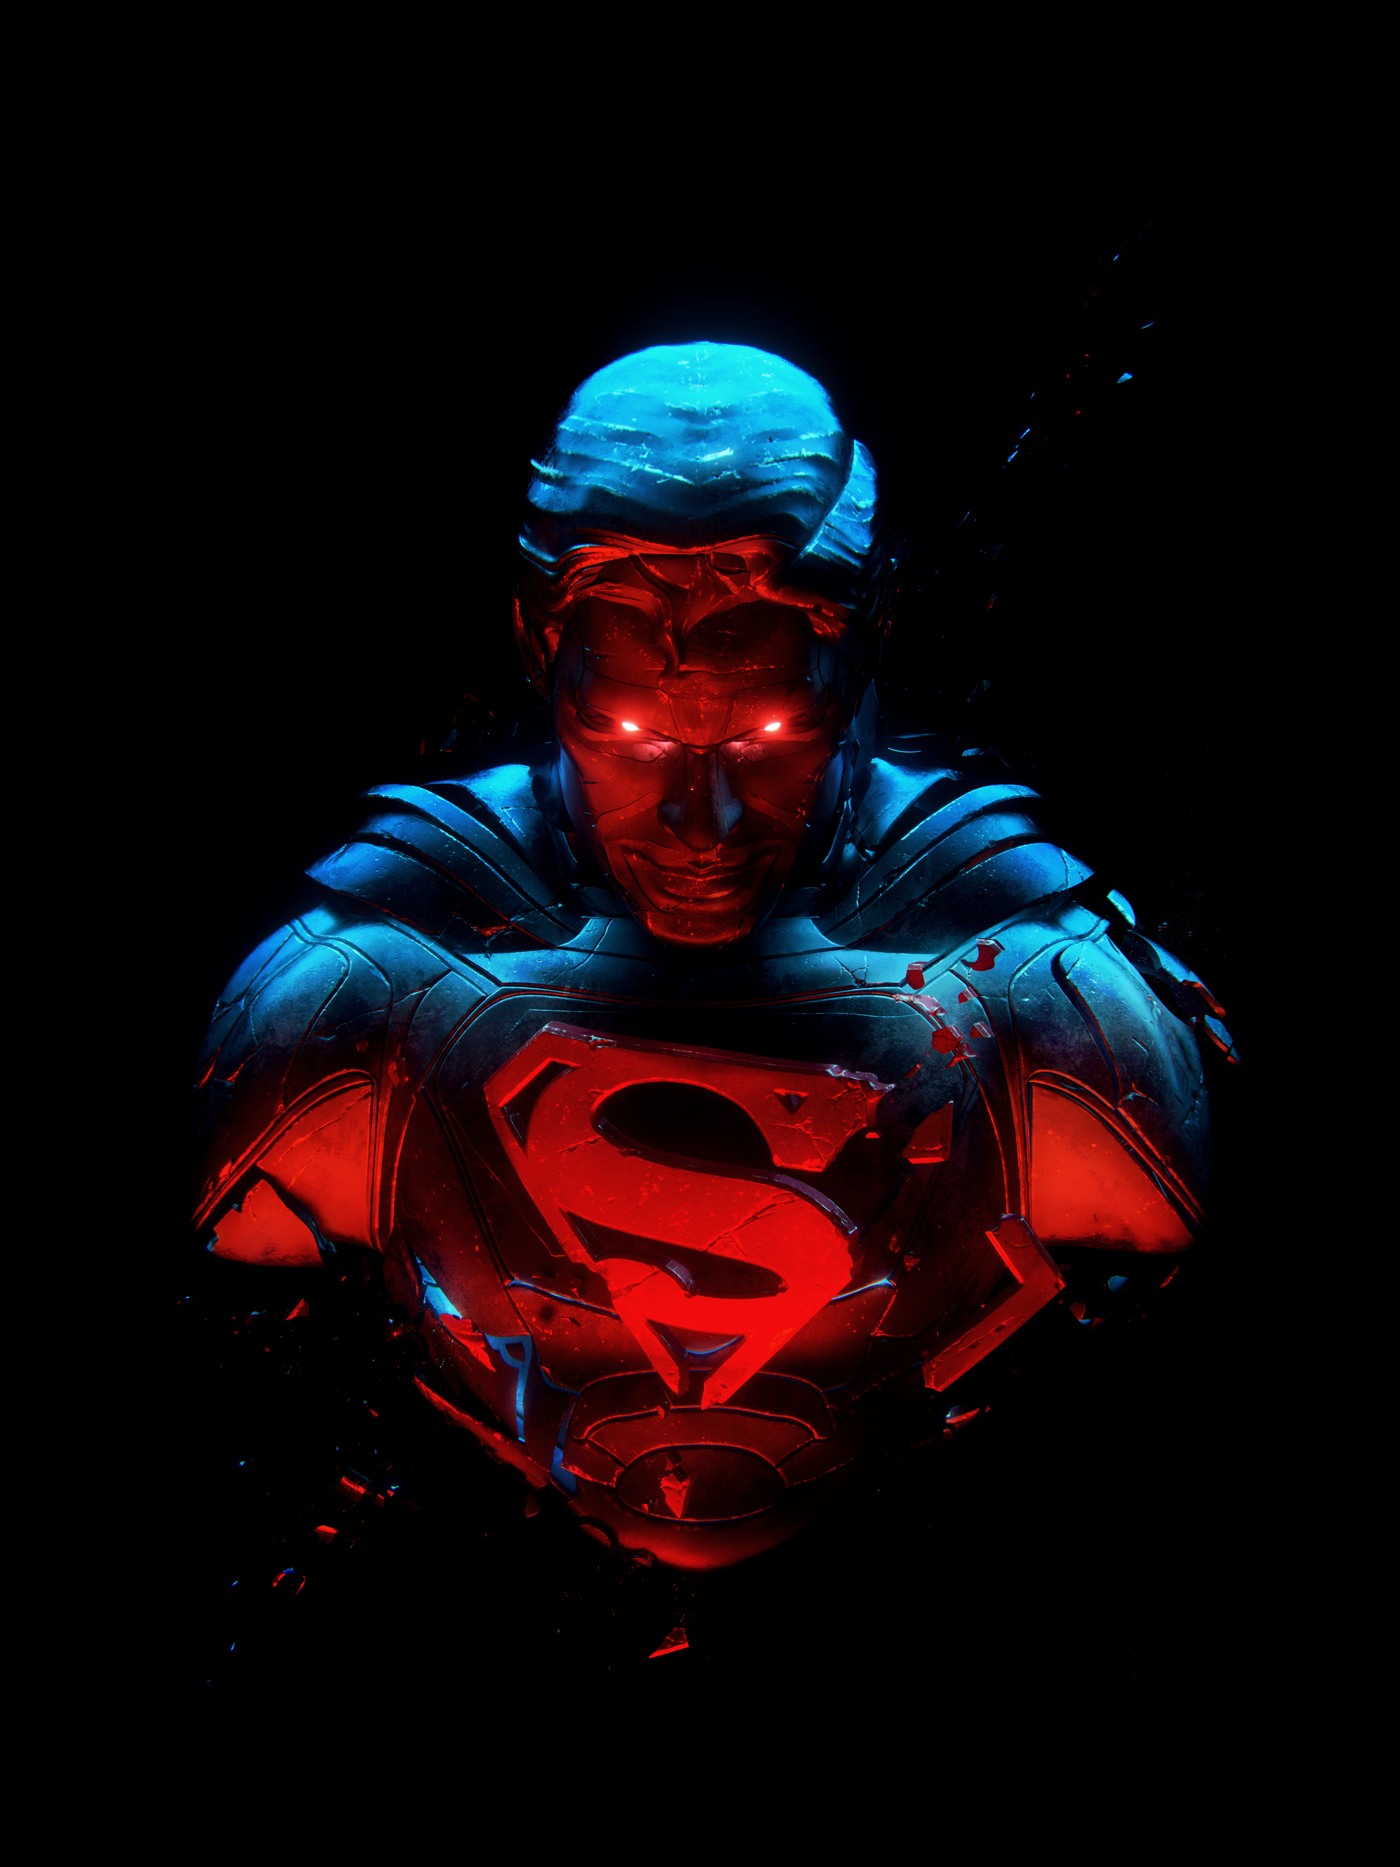 Digital art of Man of Steel by Adam Spizak